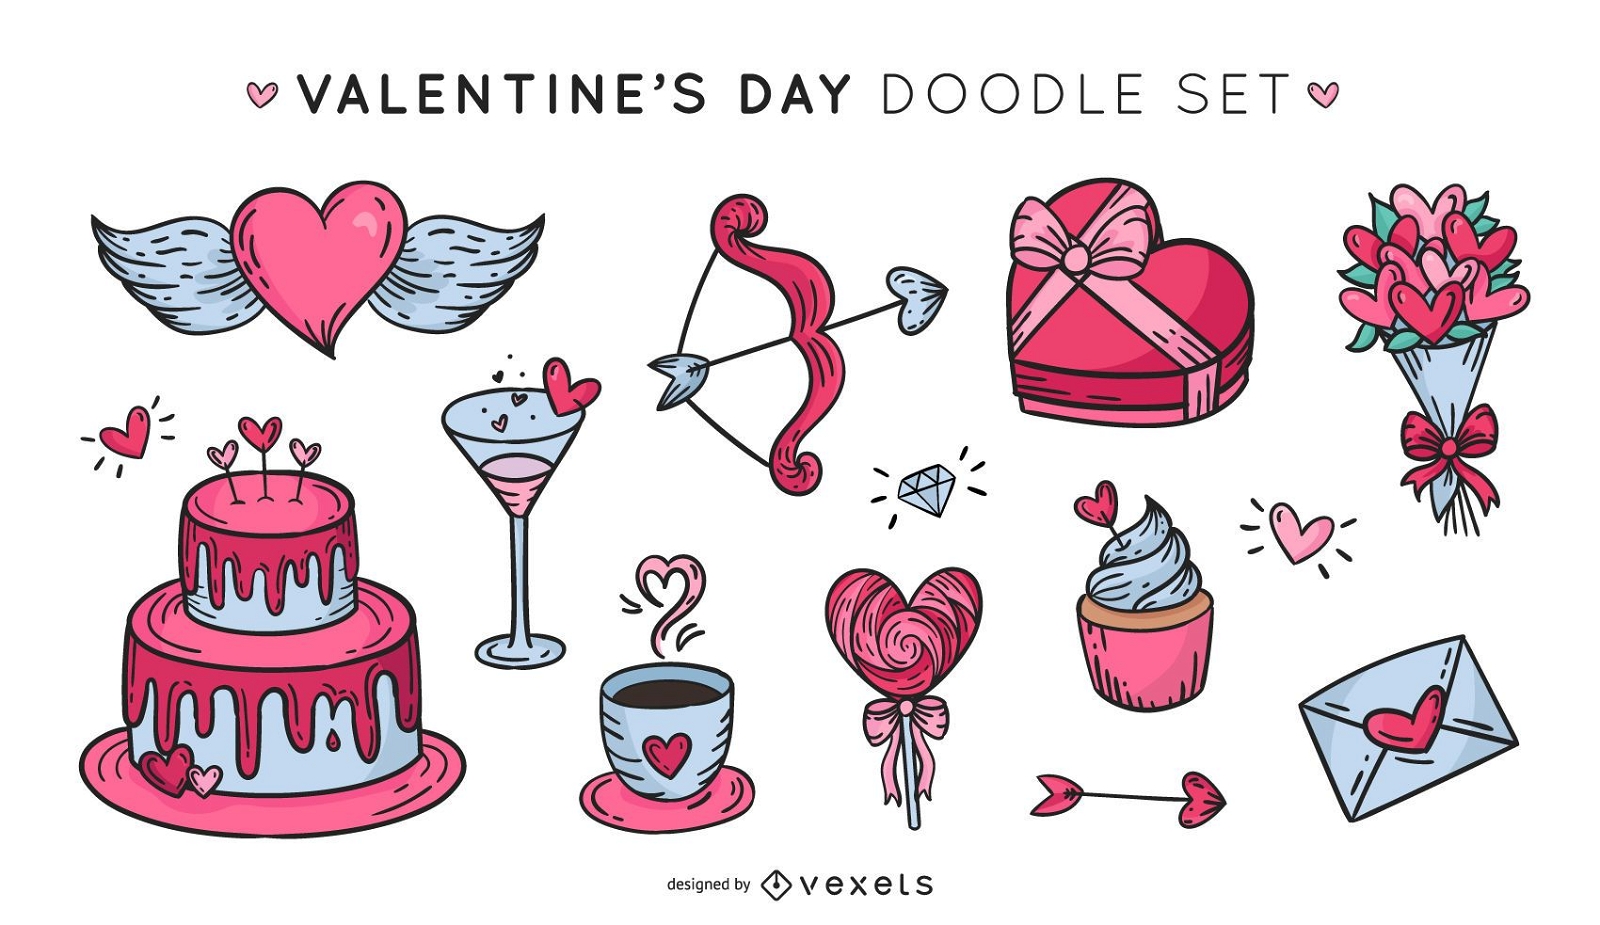 Valentine's day elements doodle set